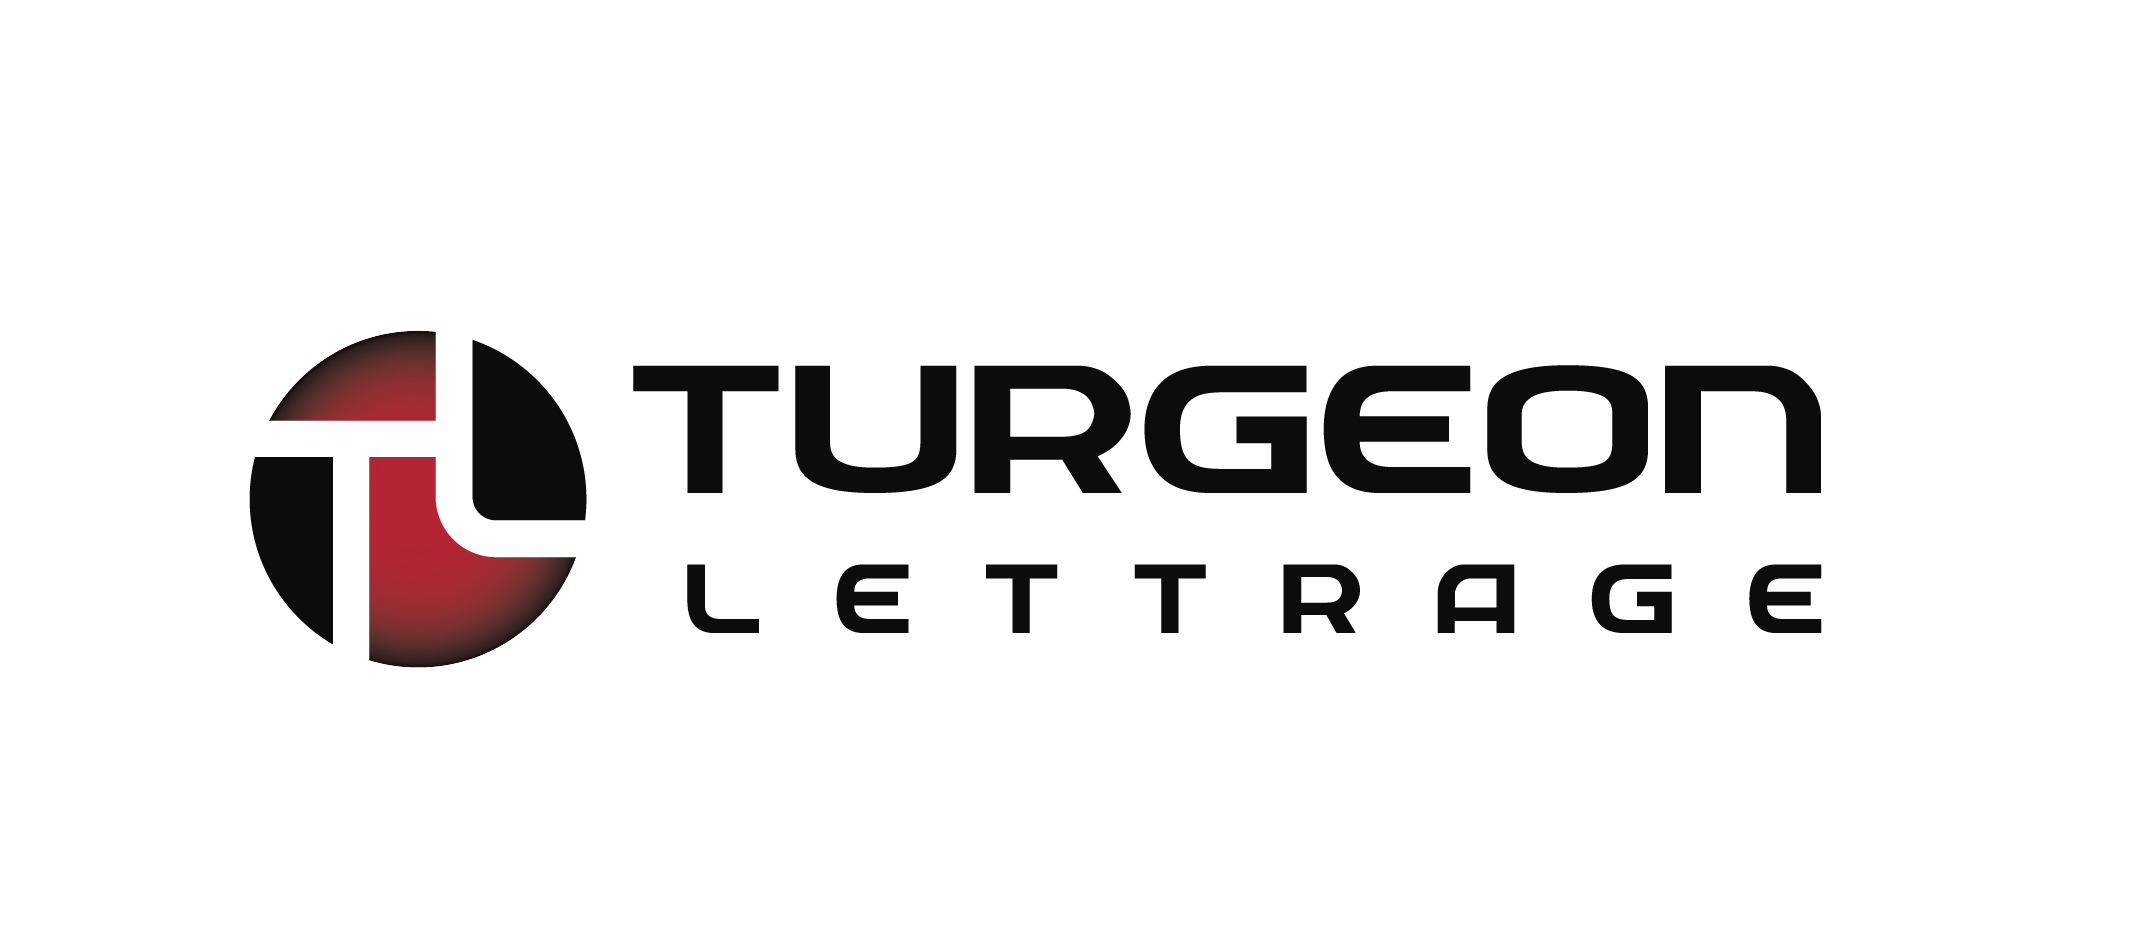 03_Turgeon Lettrage